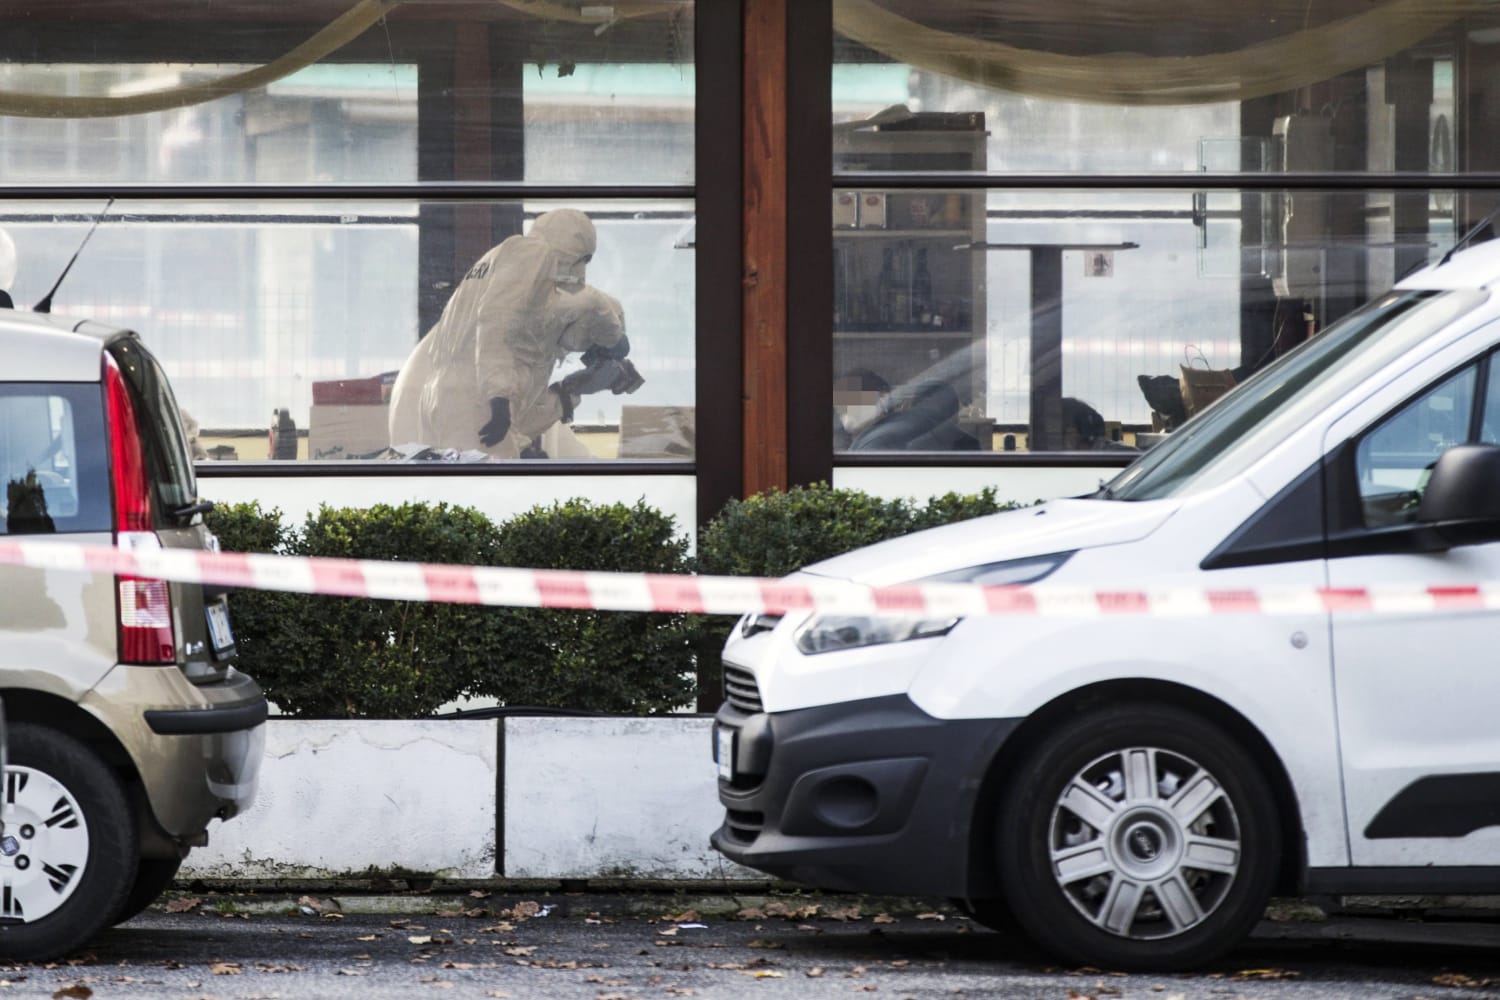 ‘I’ll kill you all’: Man kills 3 in Rome condo board meeting